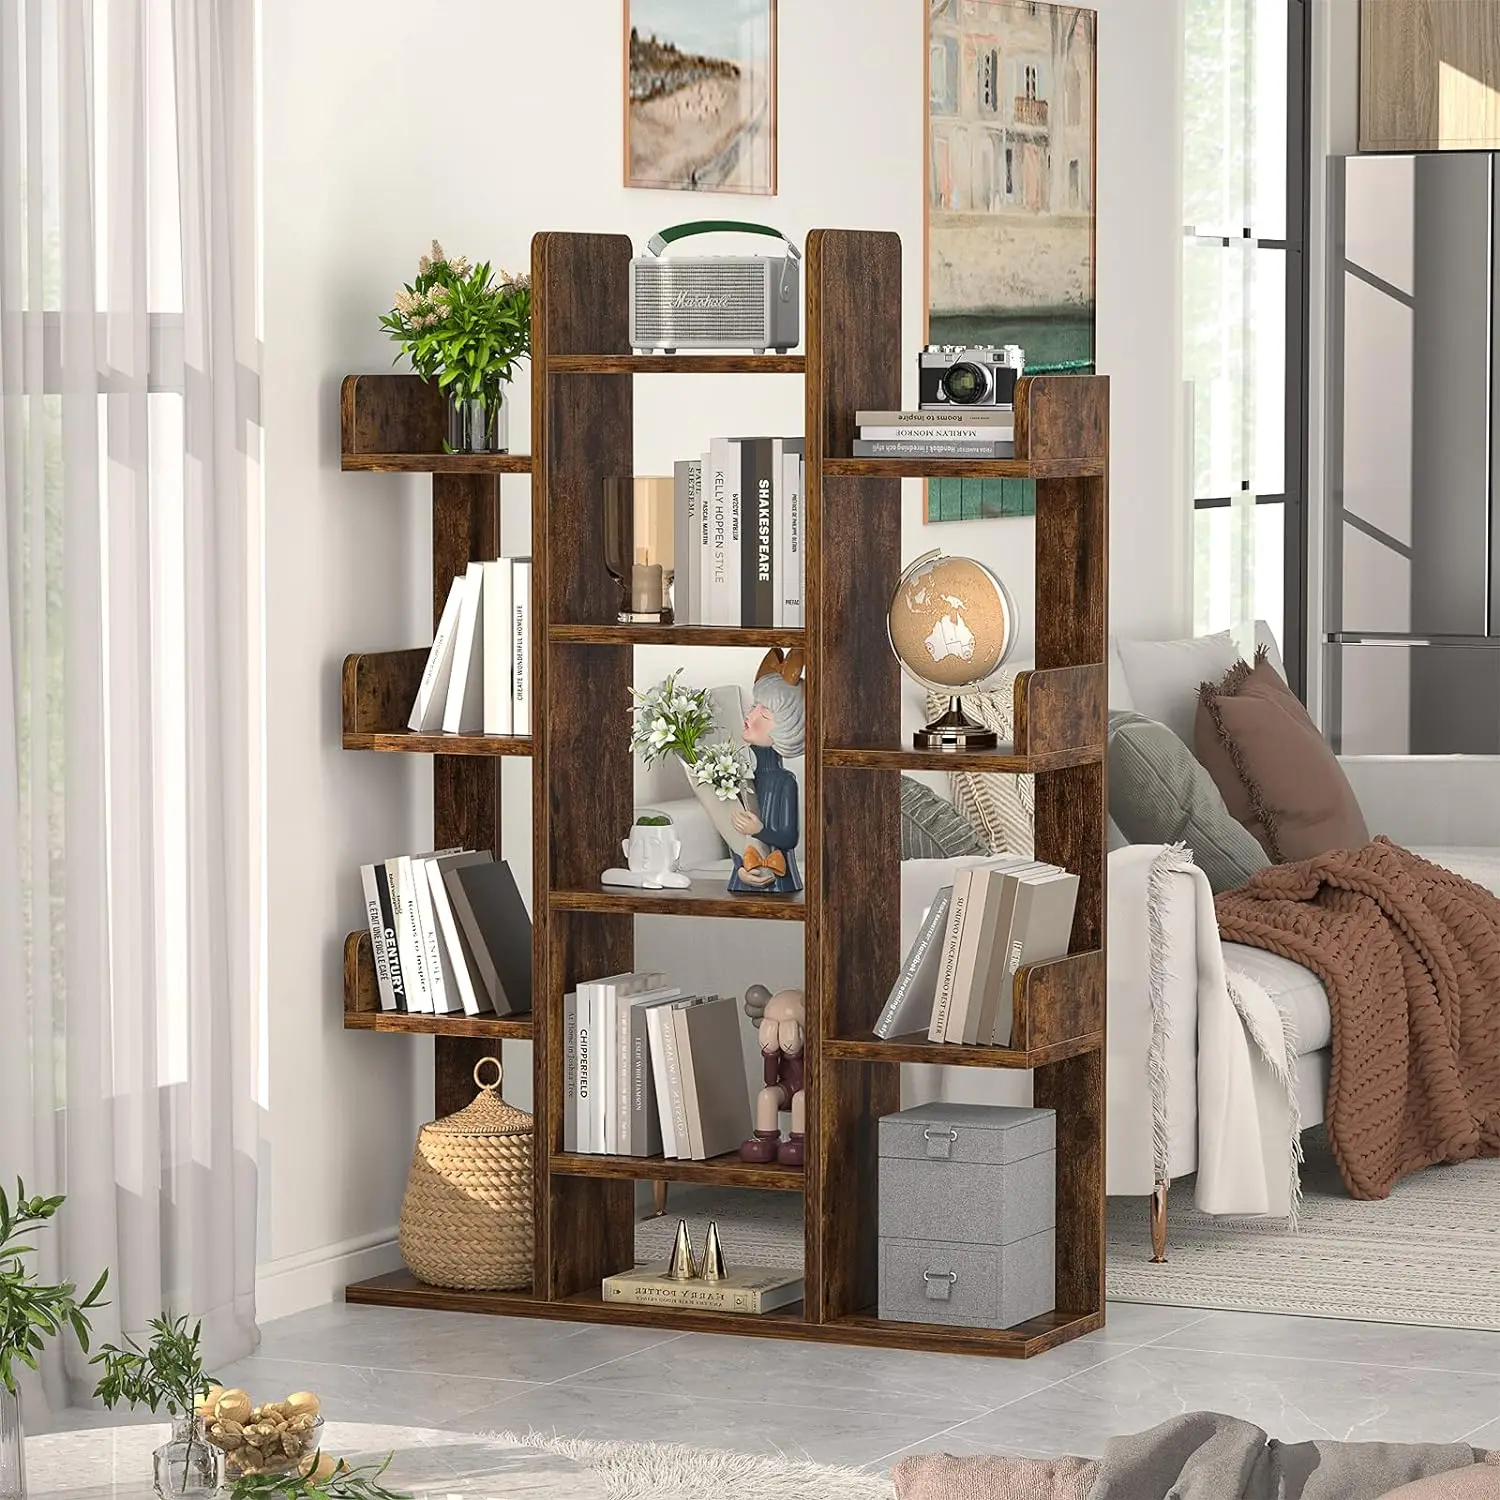 

Bookshelf, Tree-Shaped Bookcase Storage Shelf with 13 compartments, Books Organizer Display Cube Shelves,